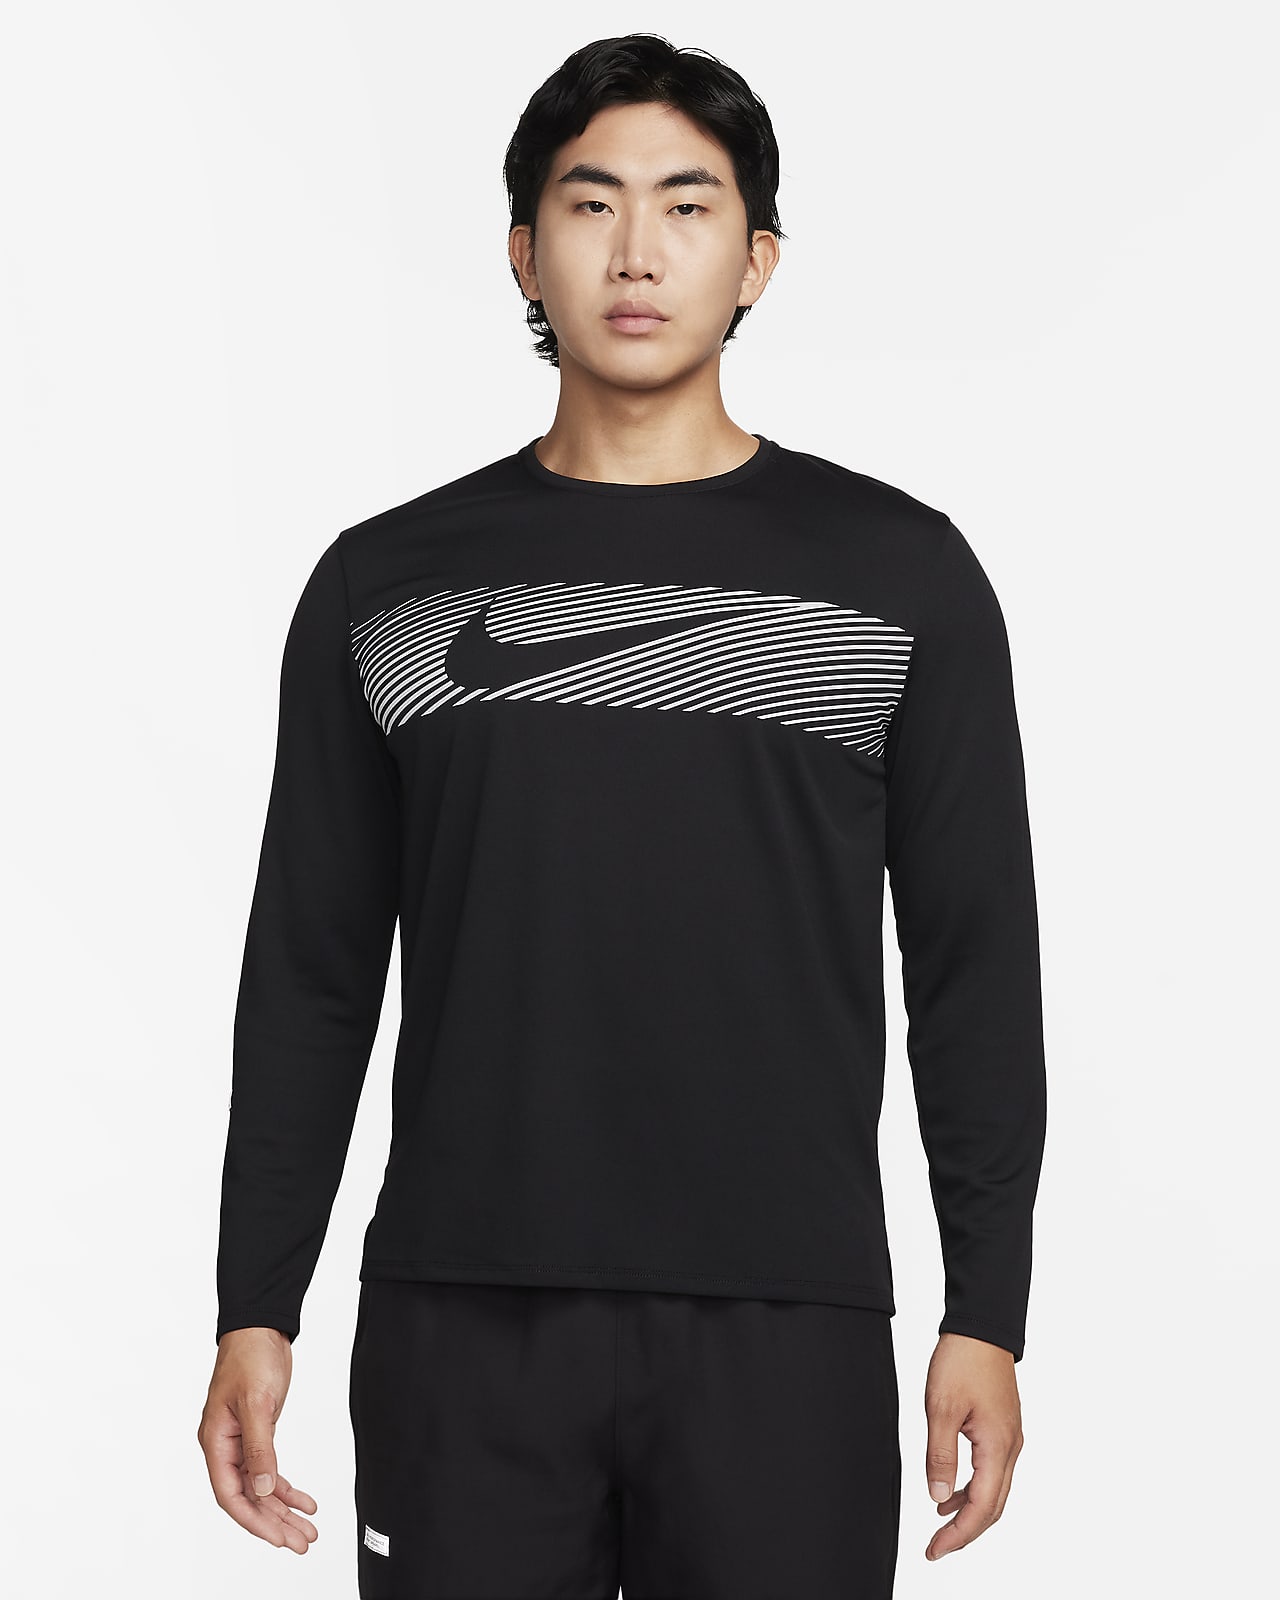 Nike Dri-FIT Miler Men's Long Sleeve Running Training Gym Top Shirt Dri-Fit